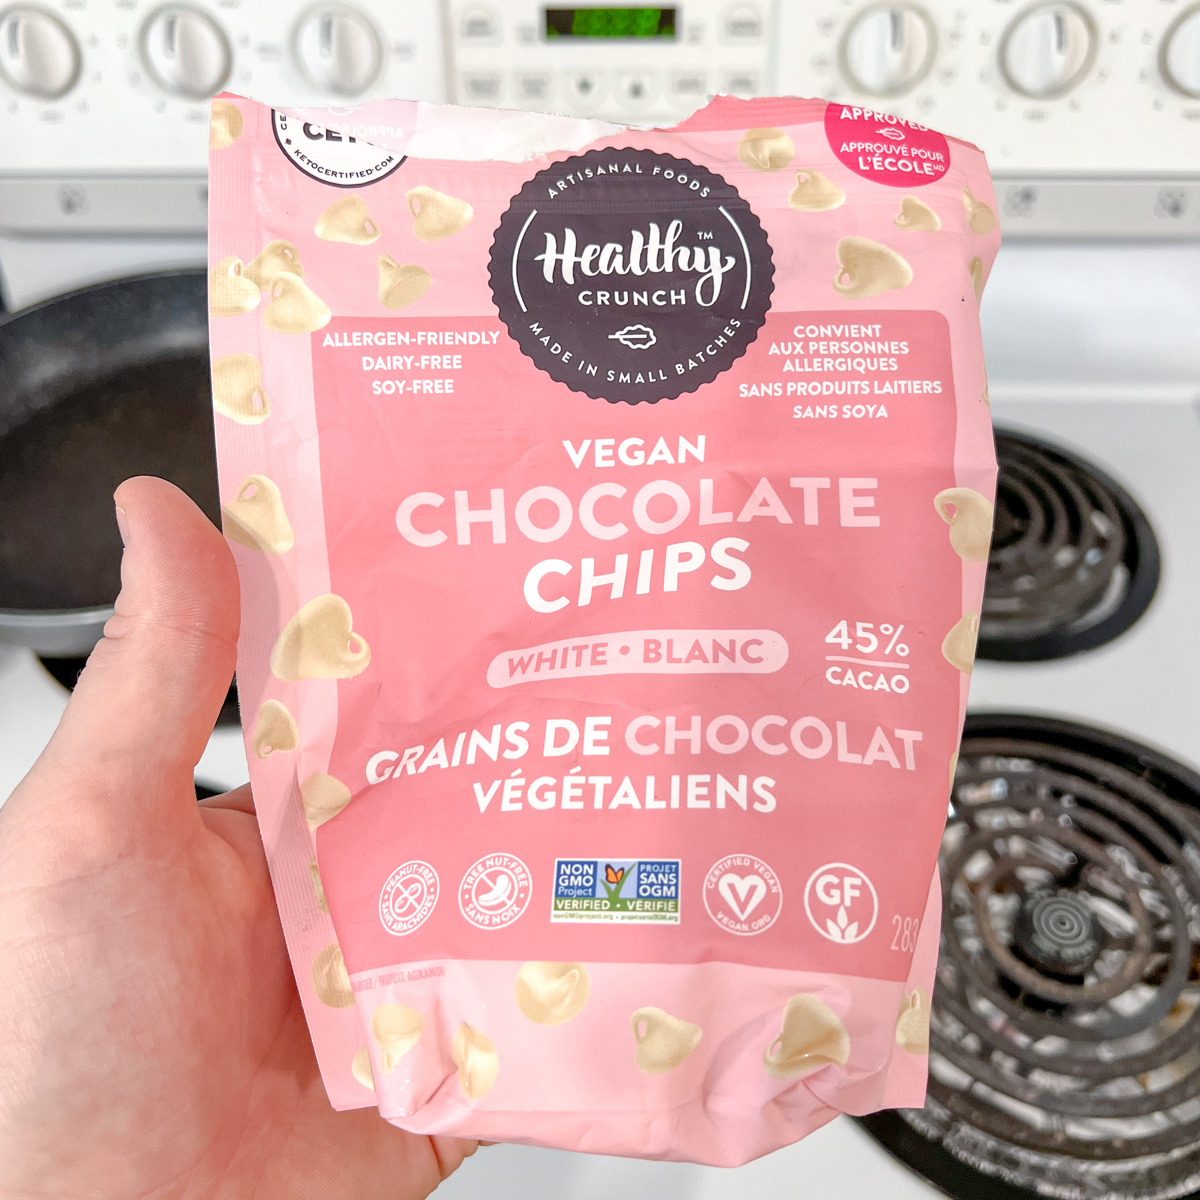 Healthy Crunch vegan white chocolate chips.